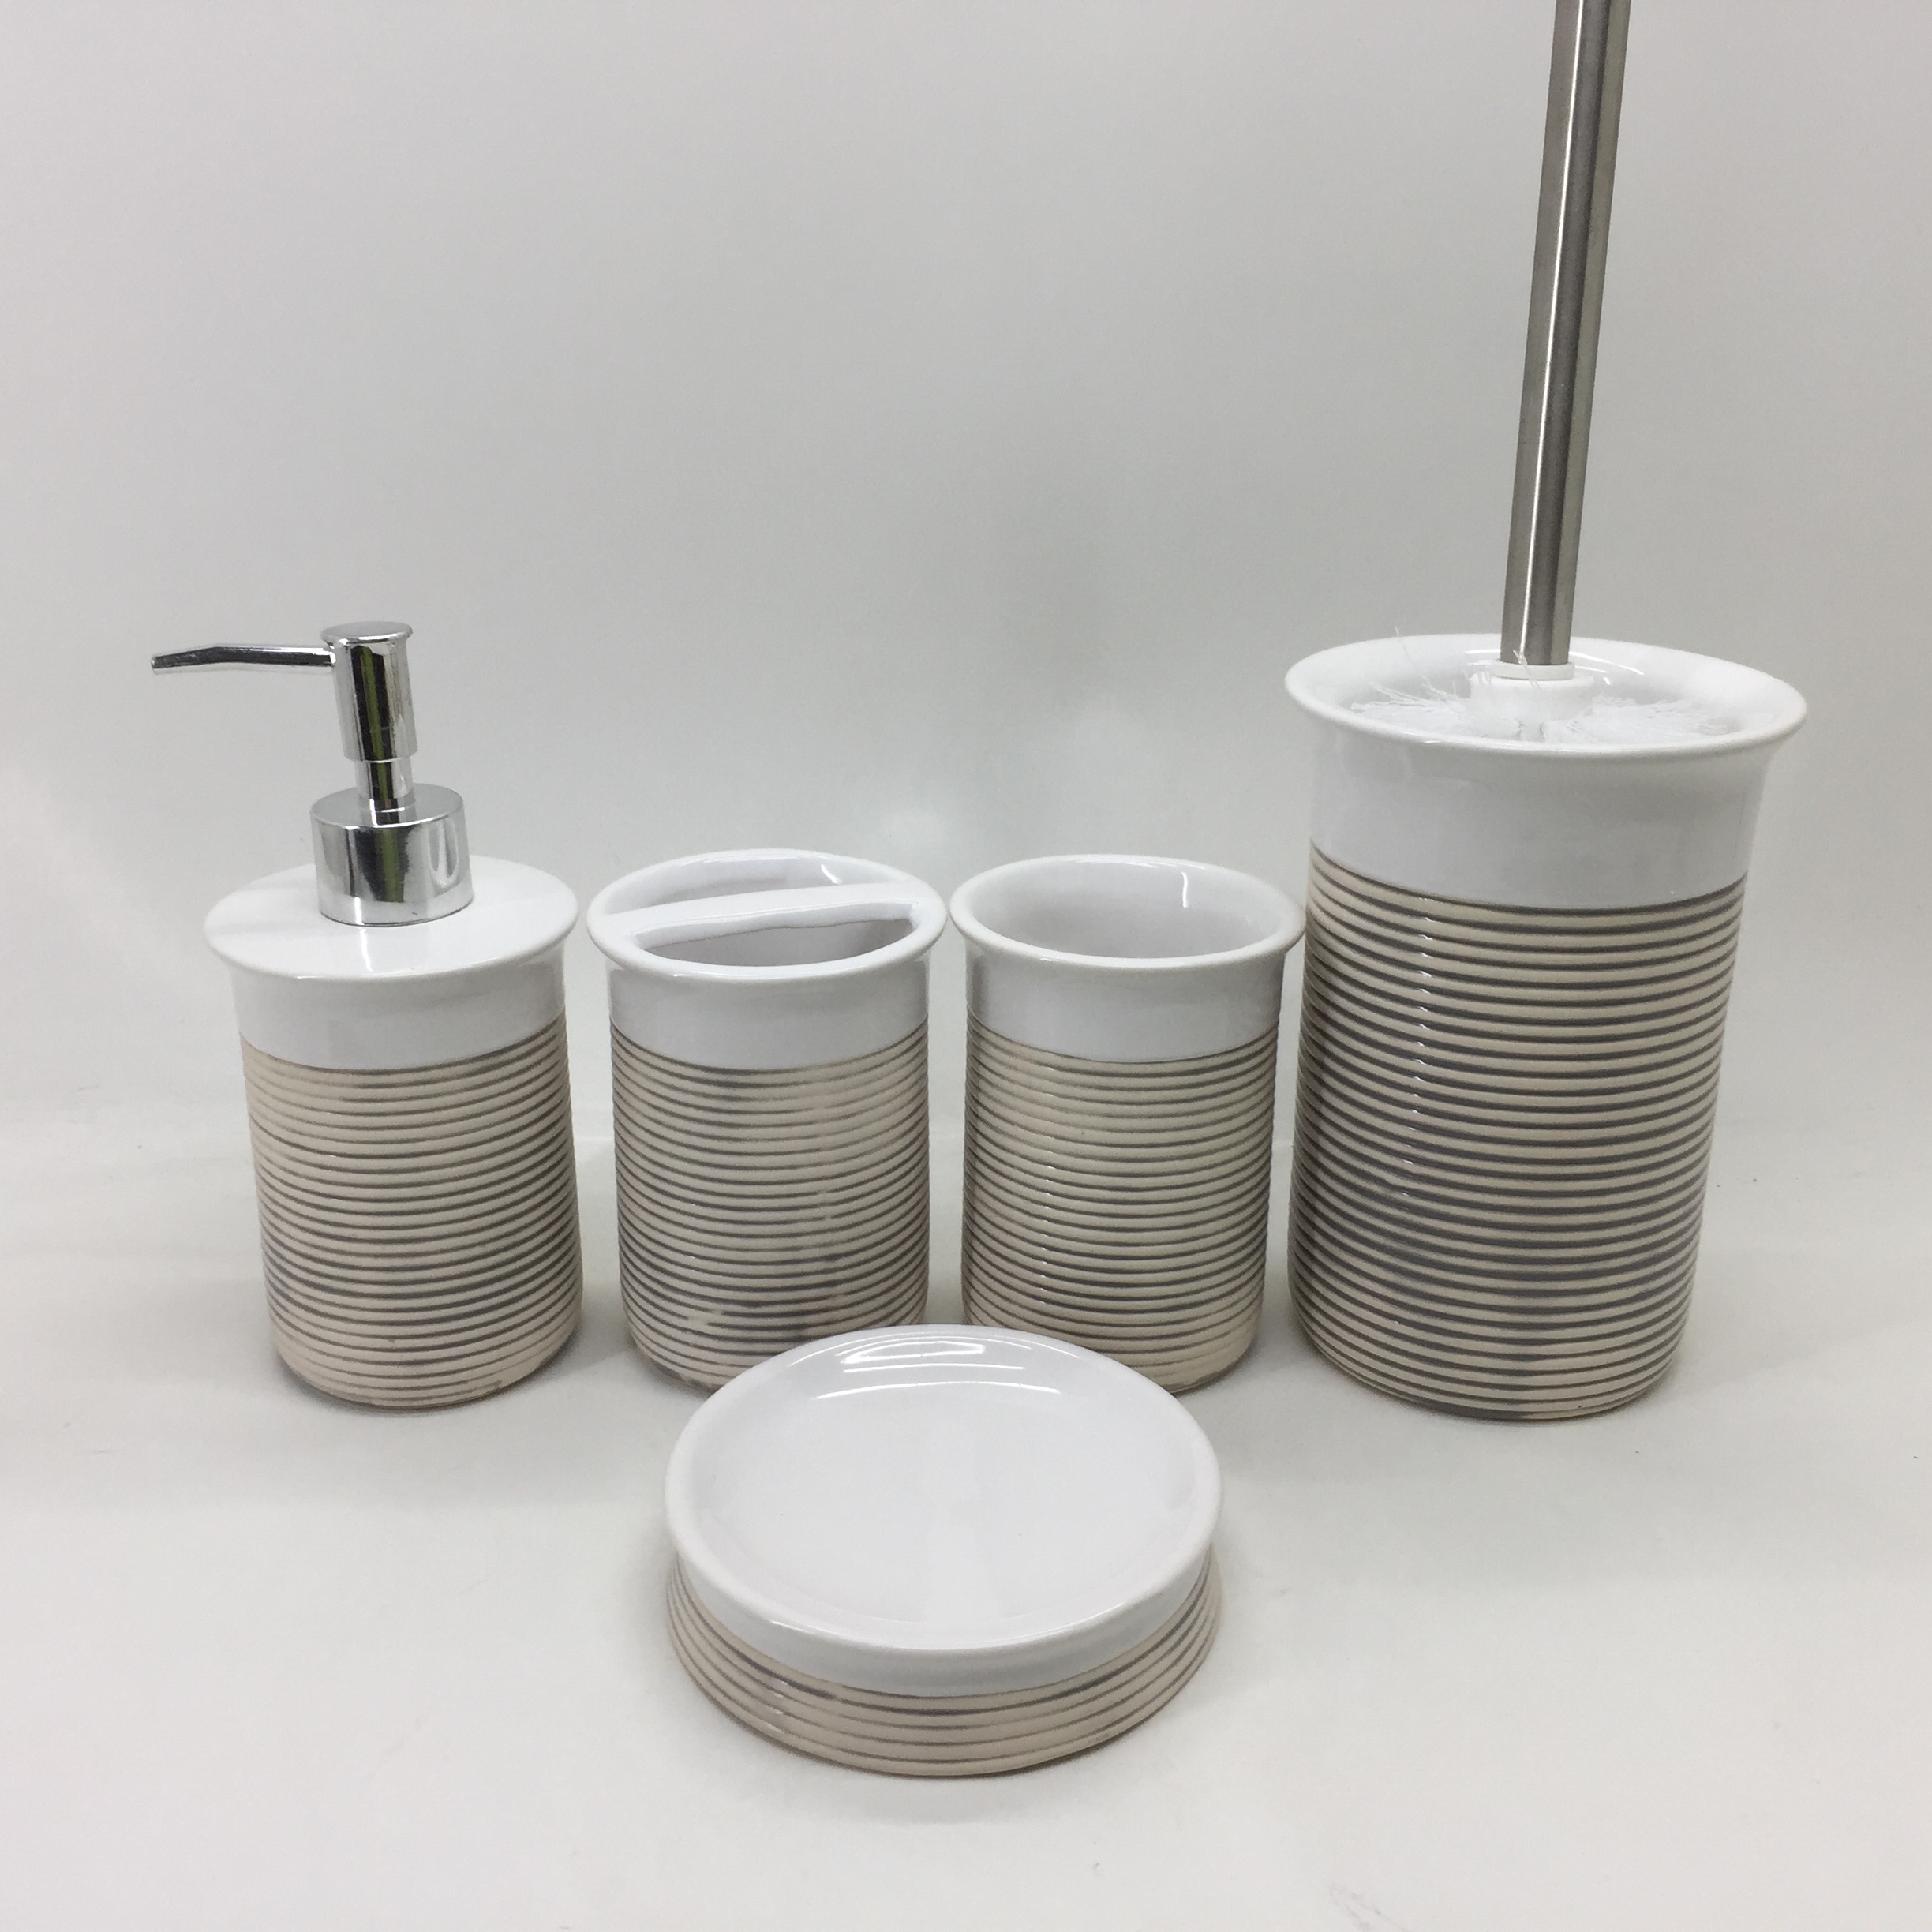 5 Piece Ceramic Bathroom Accessories Set with Toilet Brush Holder